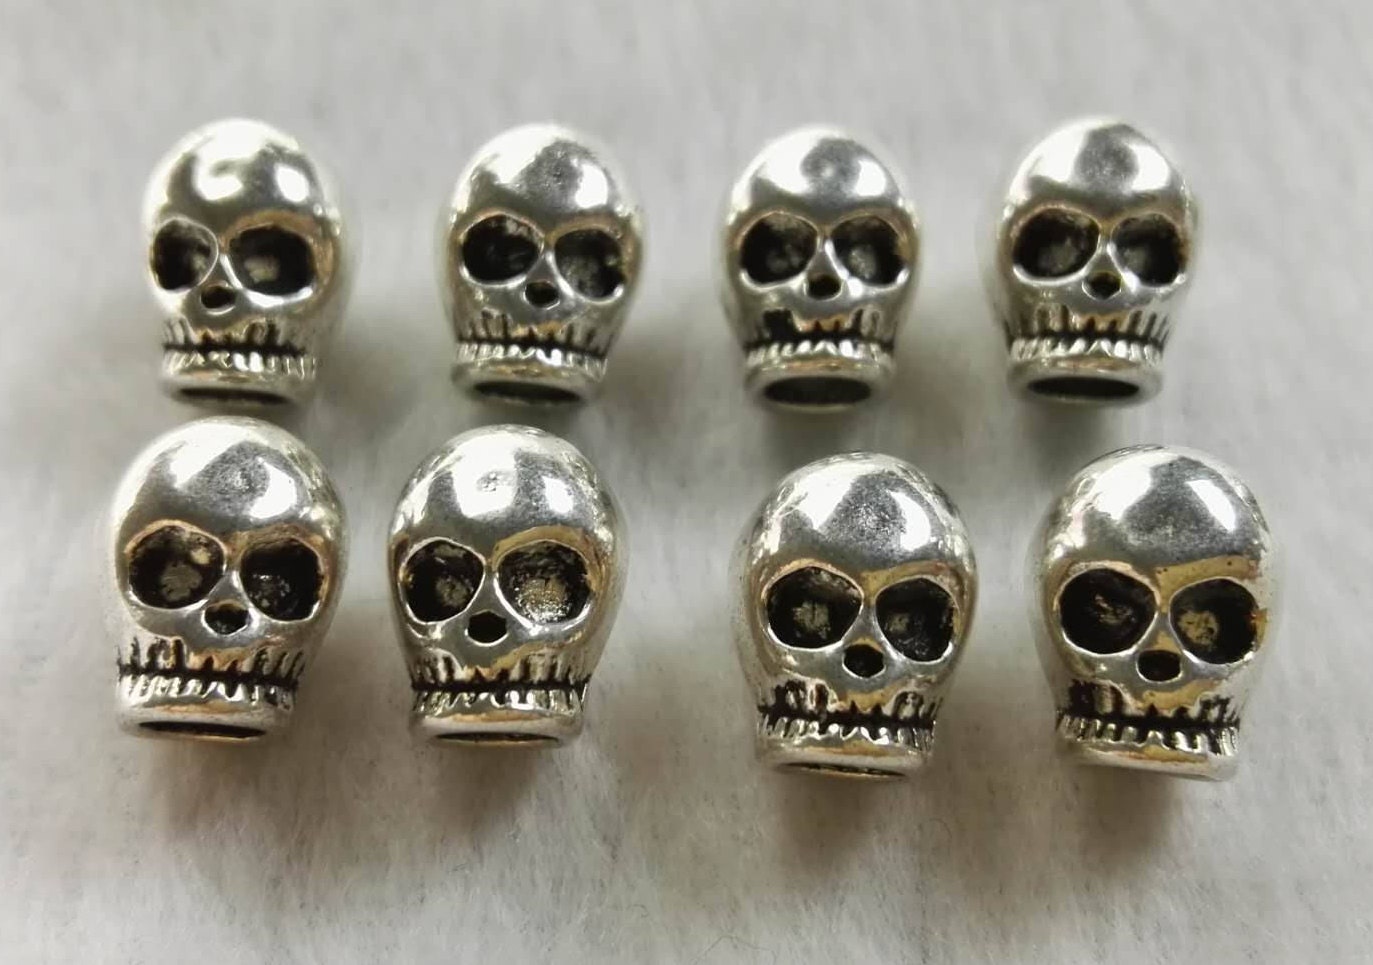 CLEARANCE 3D Skull Beads (4pcs / 9mm x 12mm / Tibetan Silver) Big